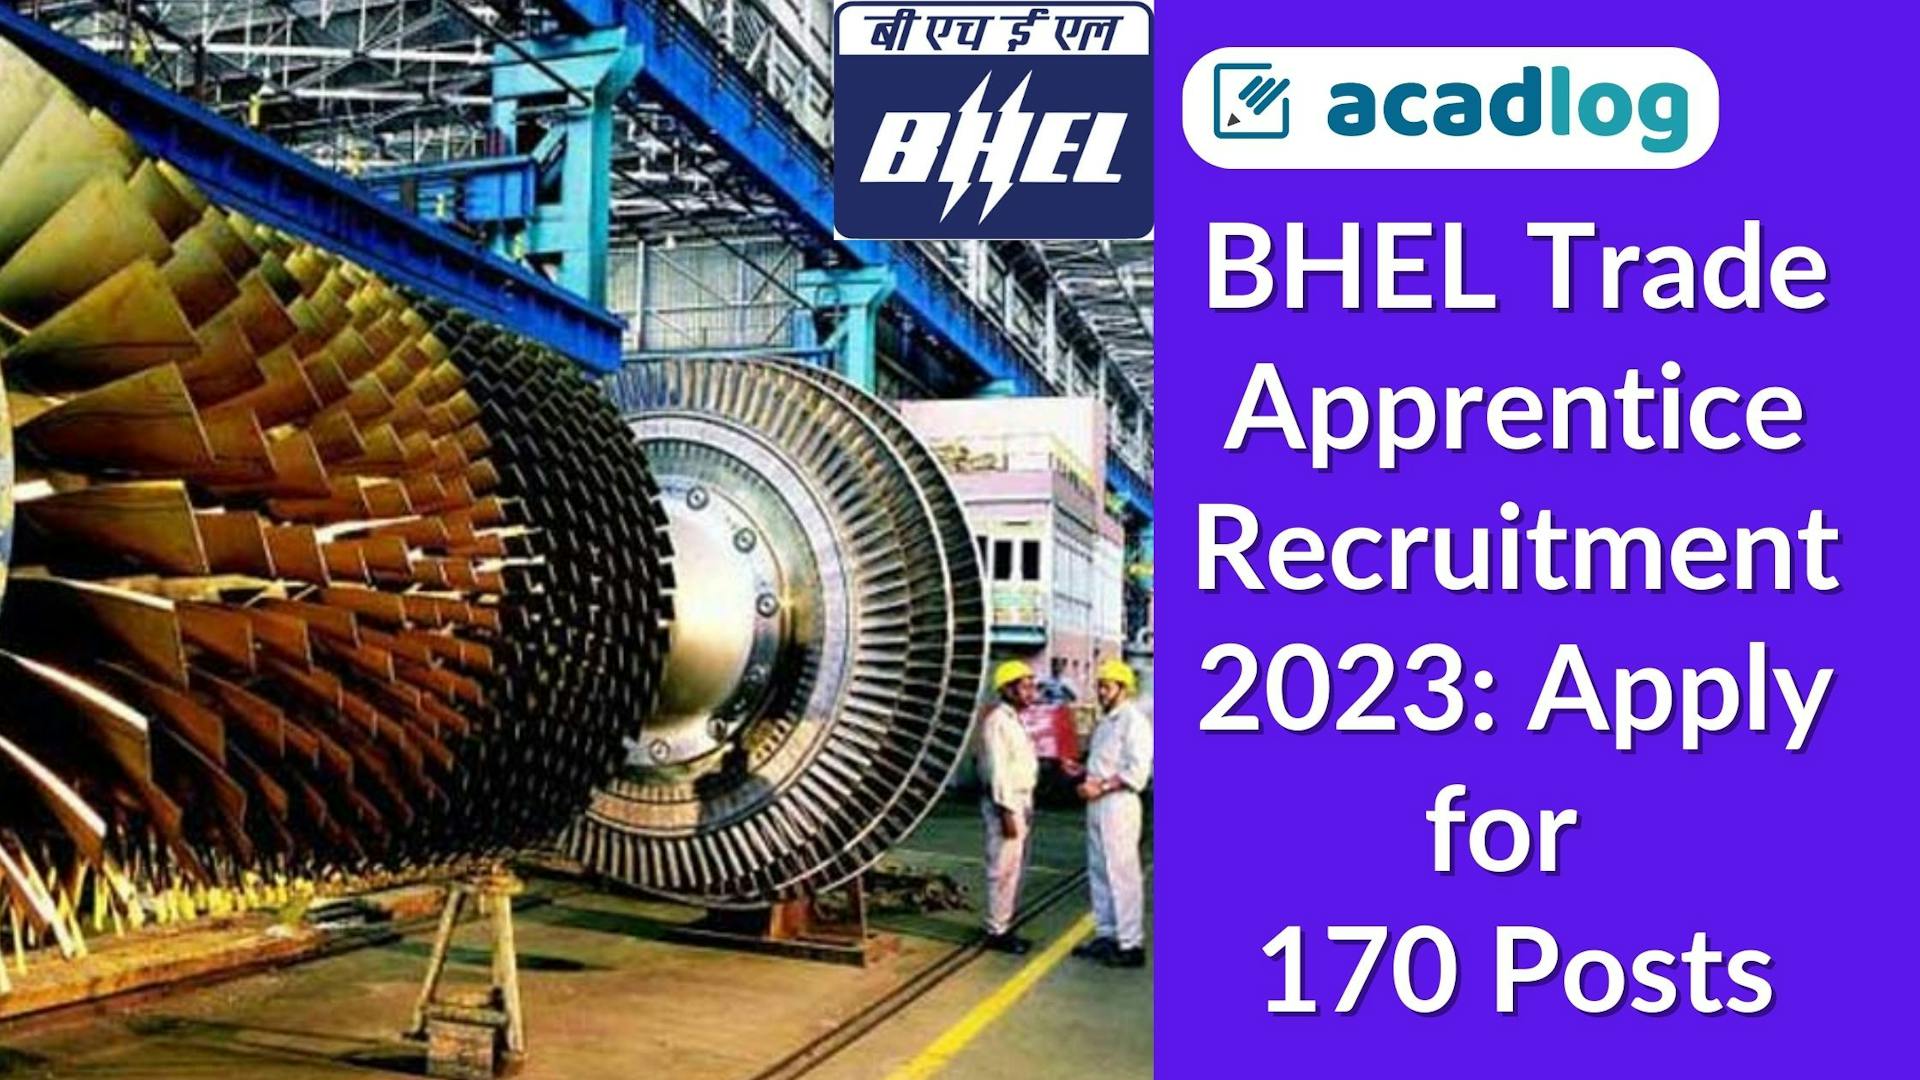 BHEL Trade Apprentice Recruitment 2023: Apply for 170 Posts